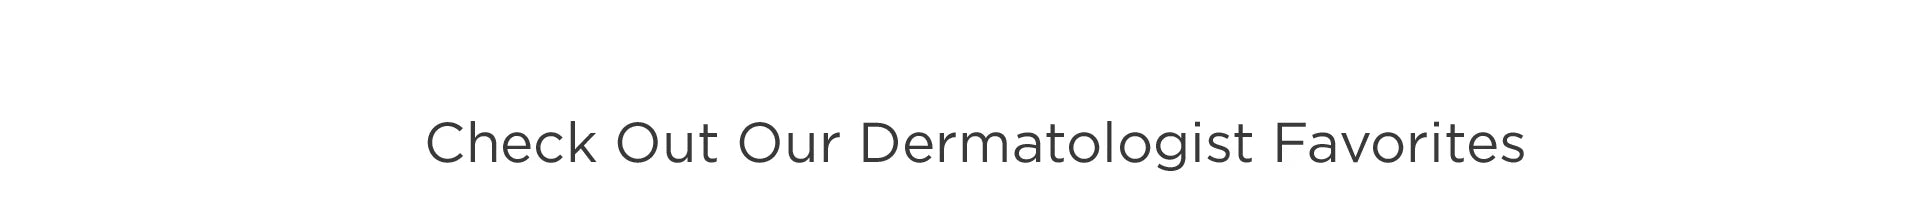 Our Dermatologists Favorites